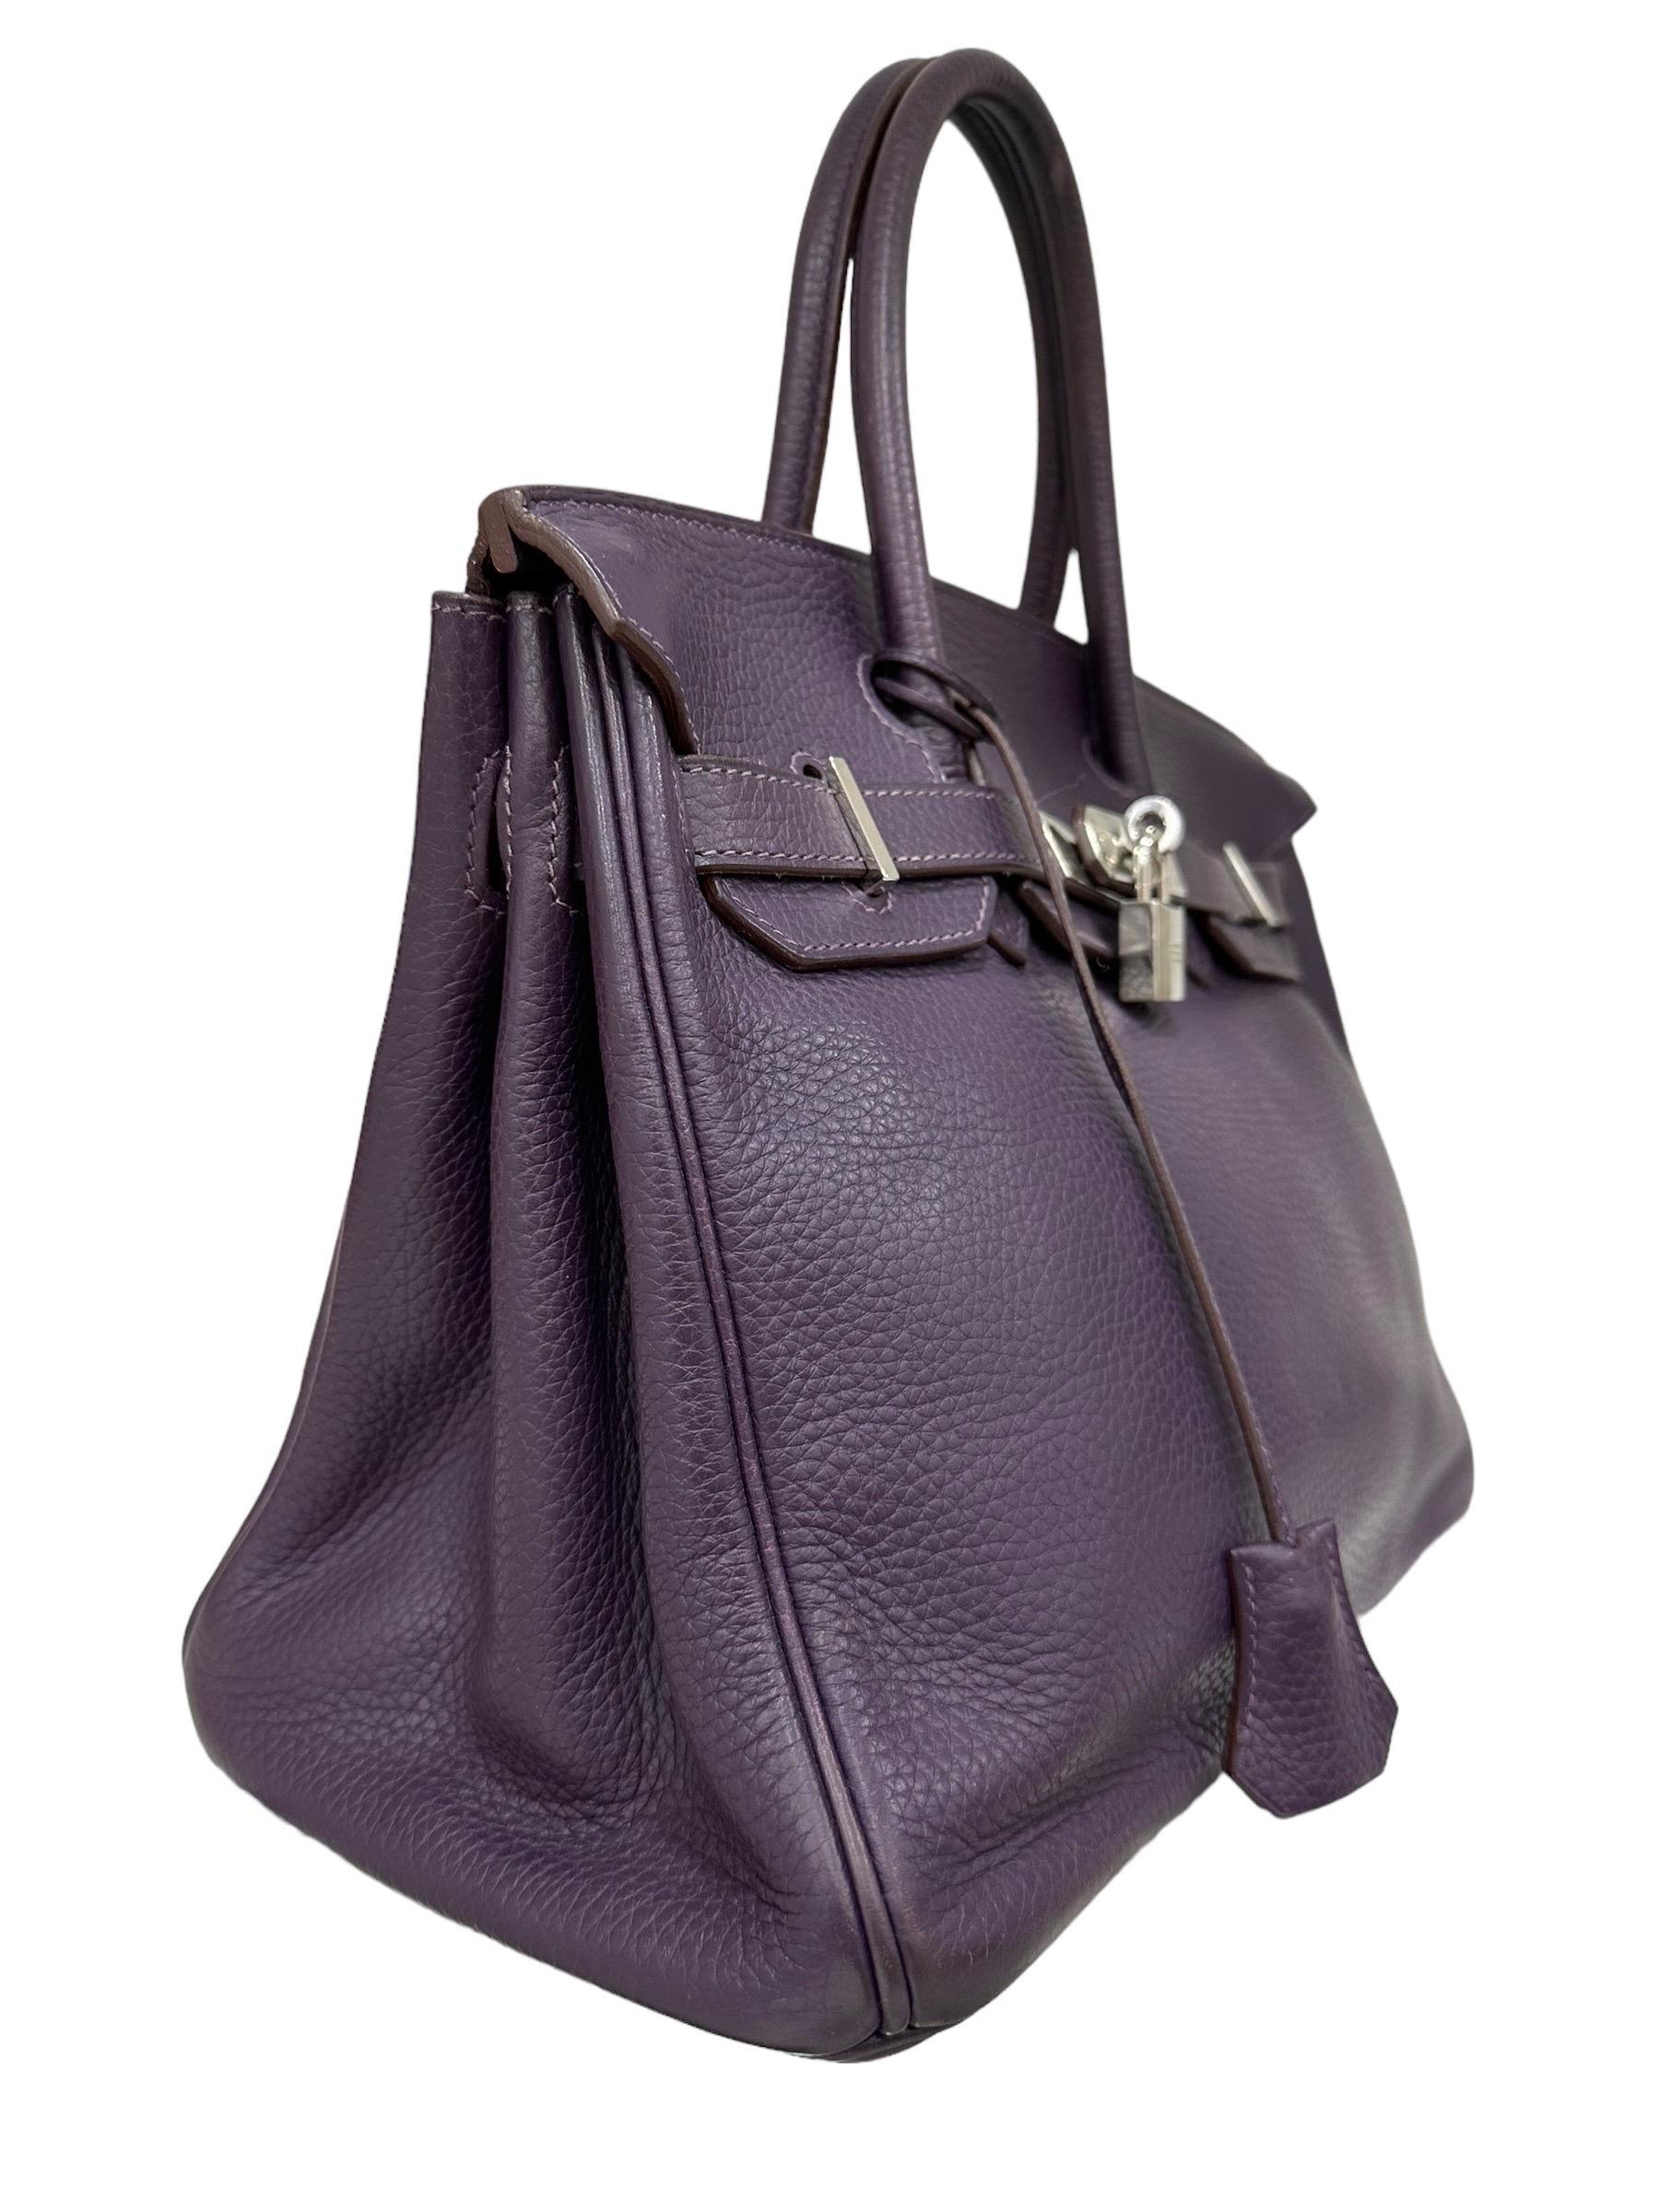 2007 Hermès Birkin 30 Clemence Leather Violet Raisin Top Handle Bag For Sale 2